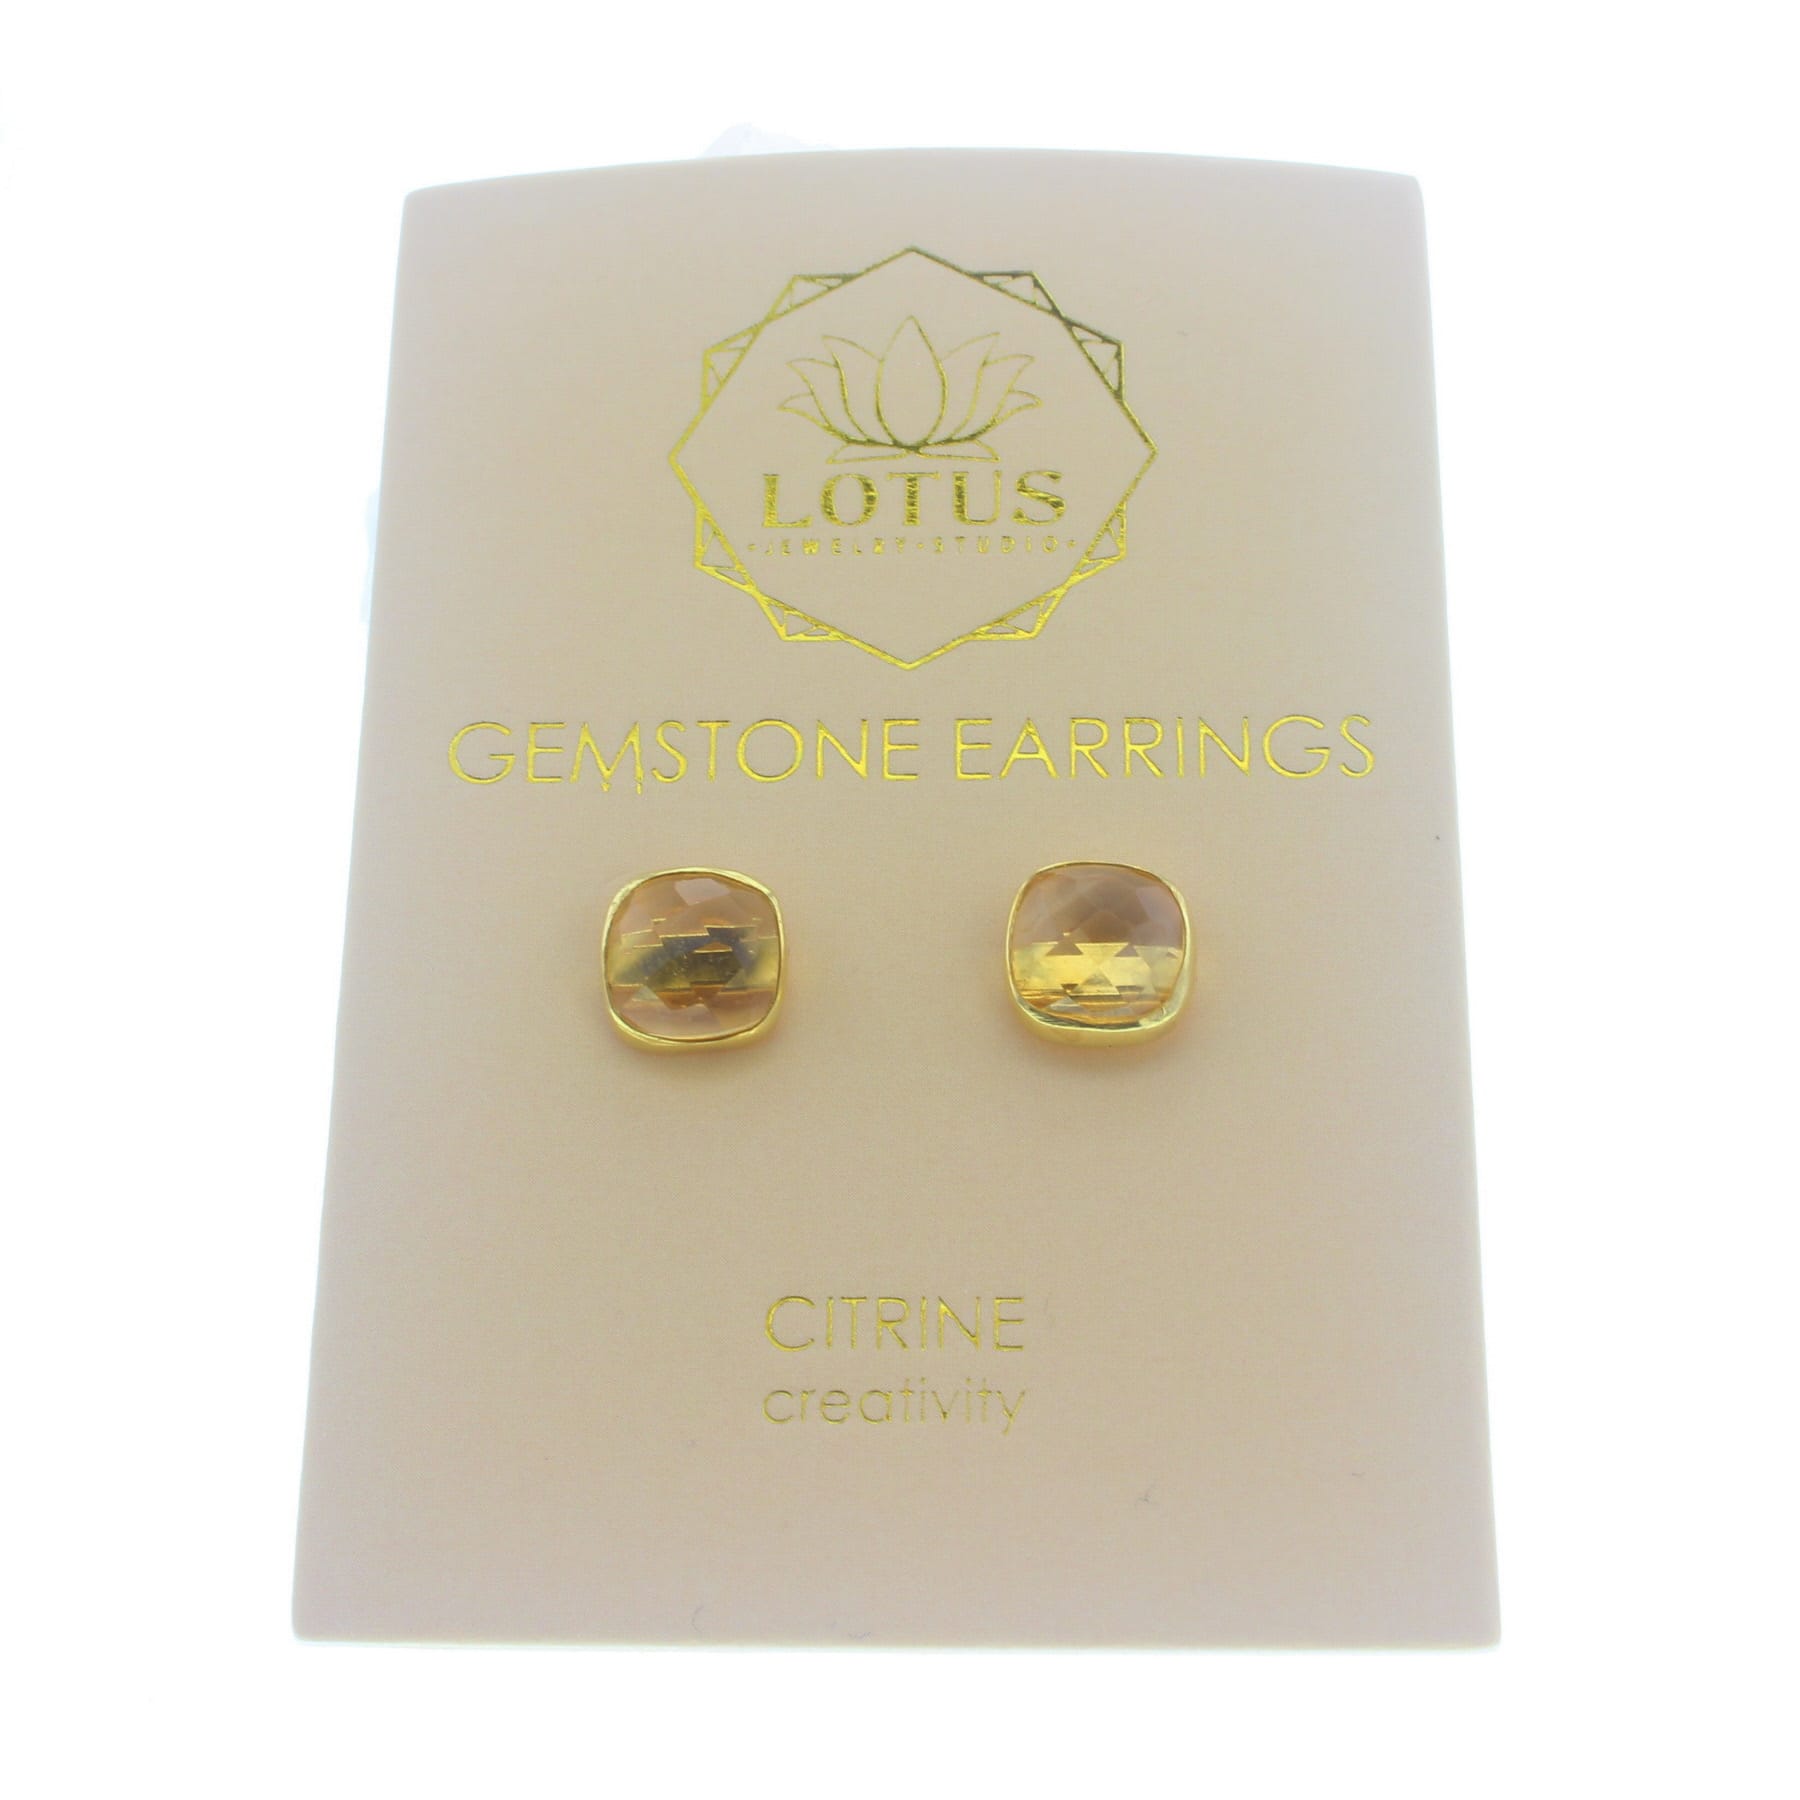 Carded Gemstone Earrings